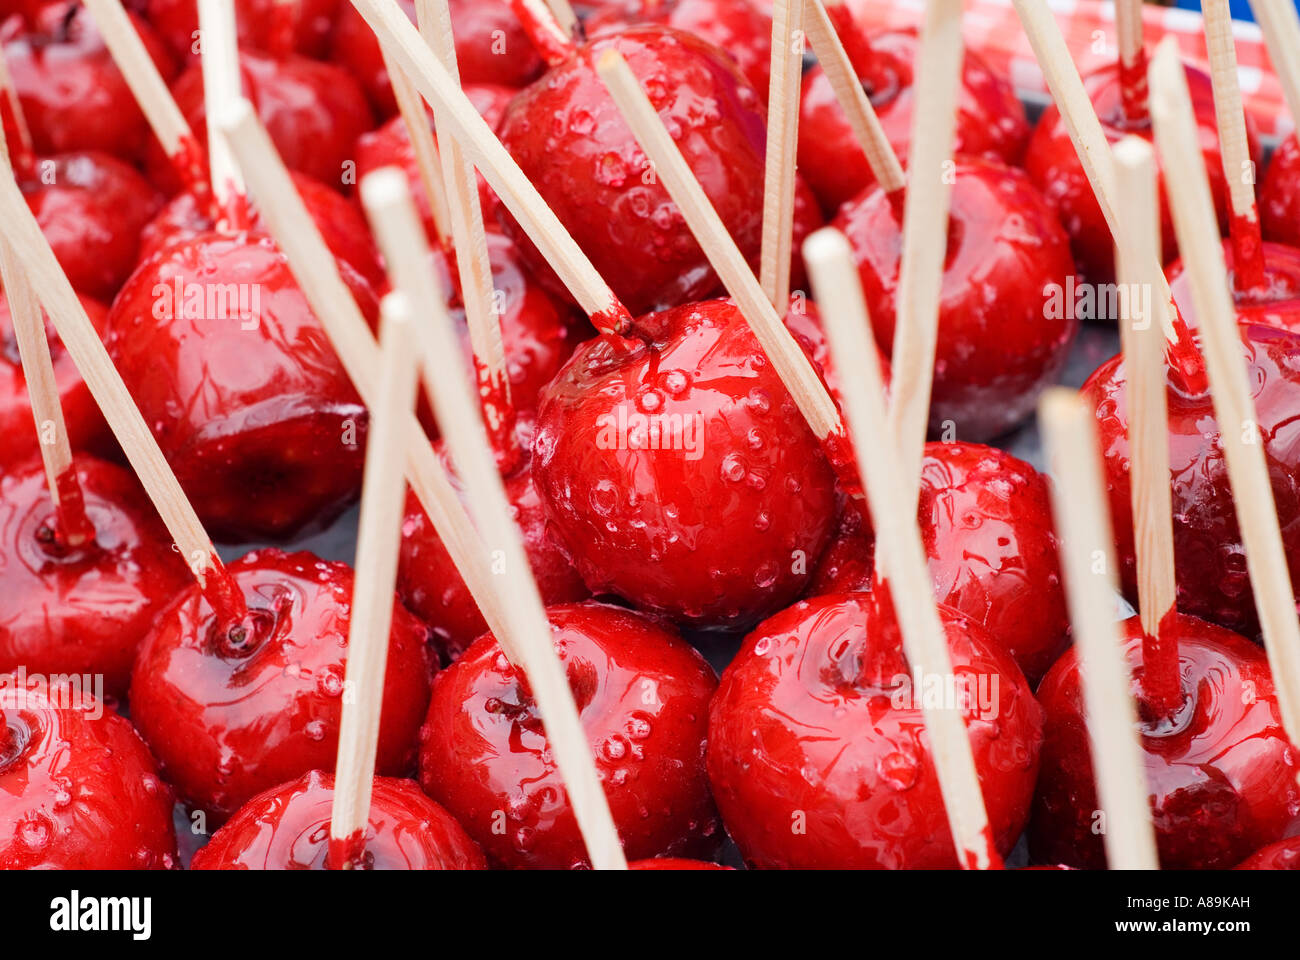 Candied cherries Stock Photo